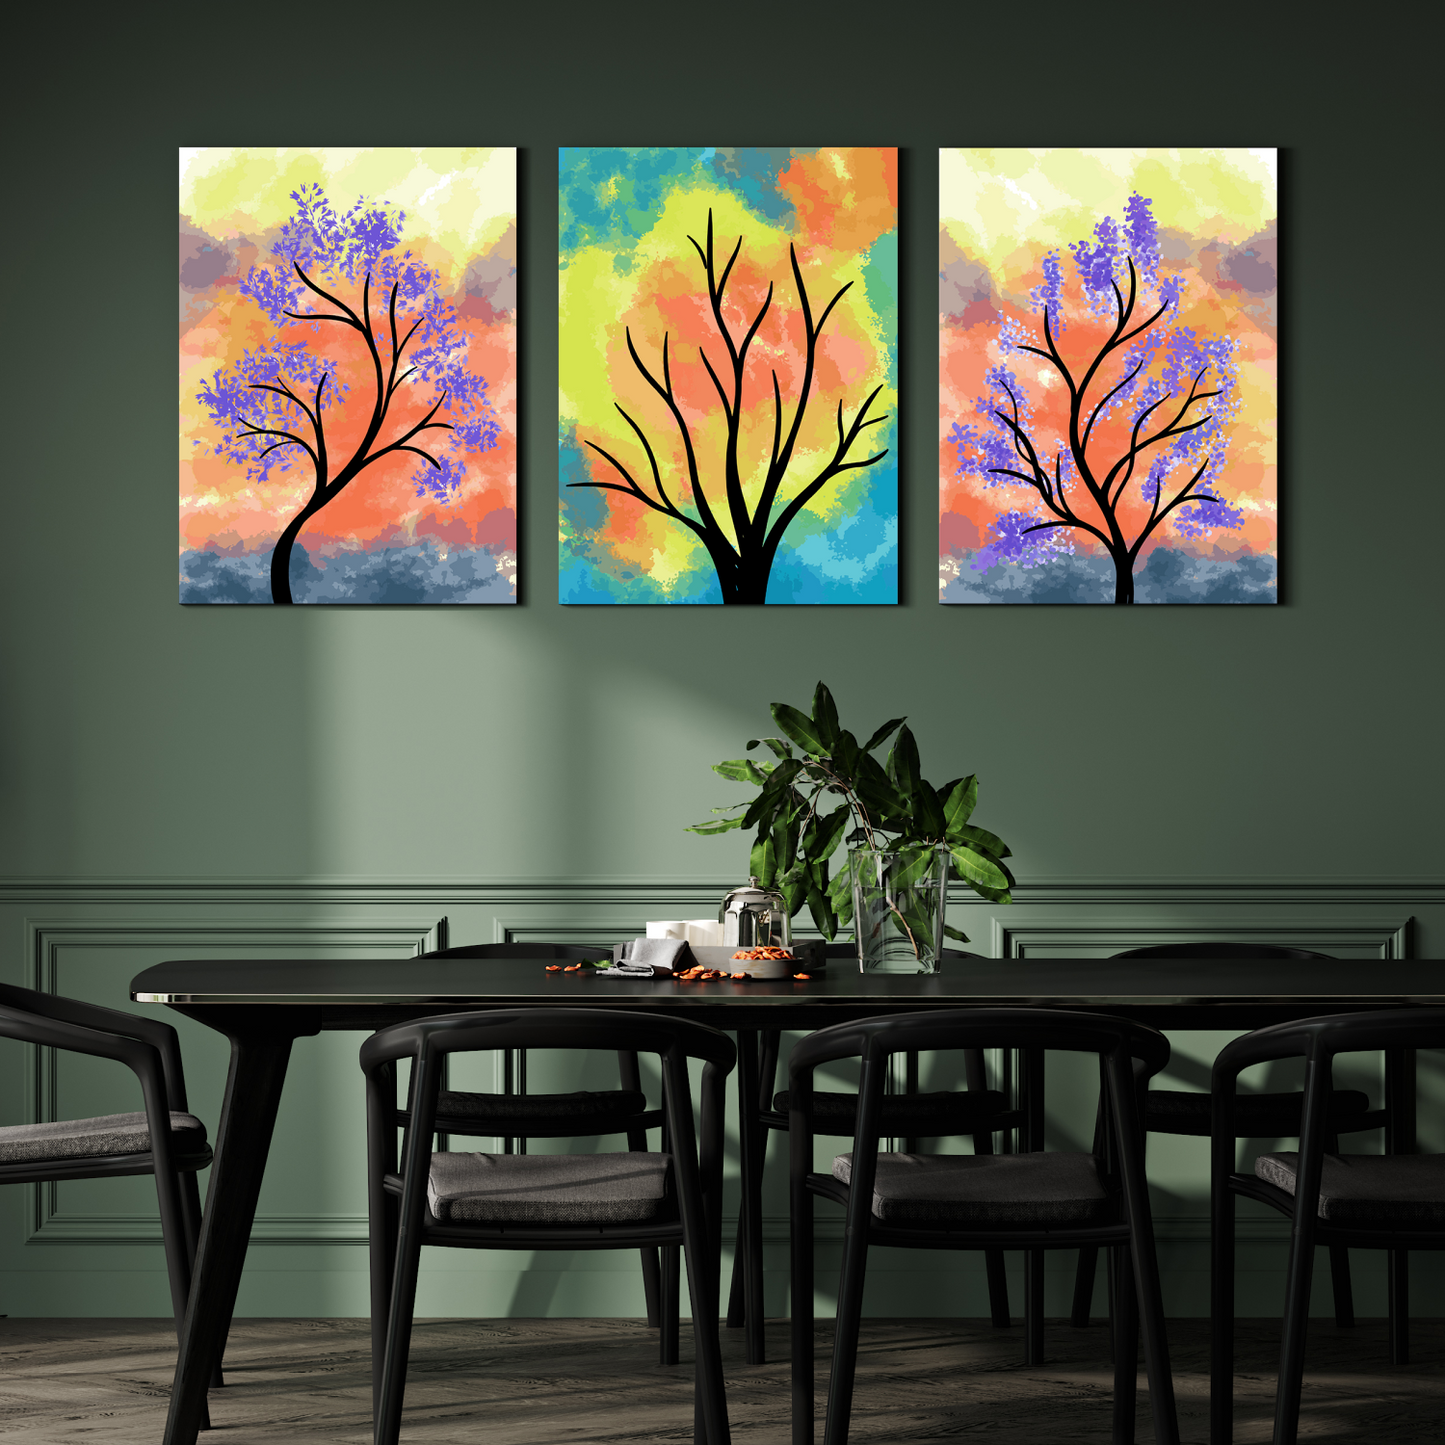 Colorful Botanical Wood Print Wall Art Set of 3